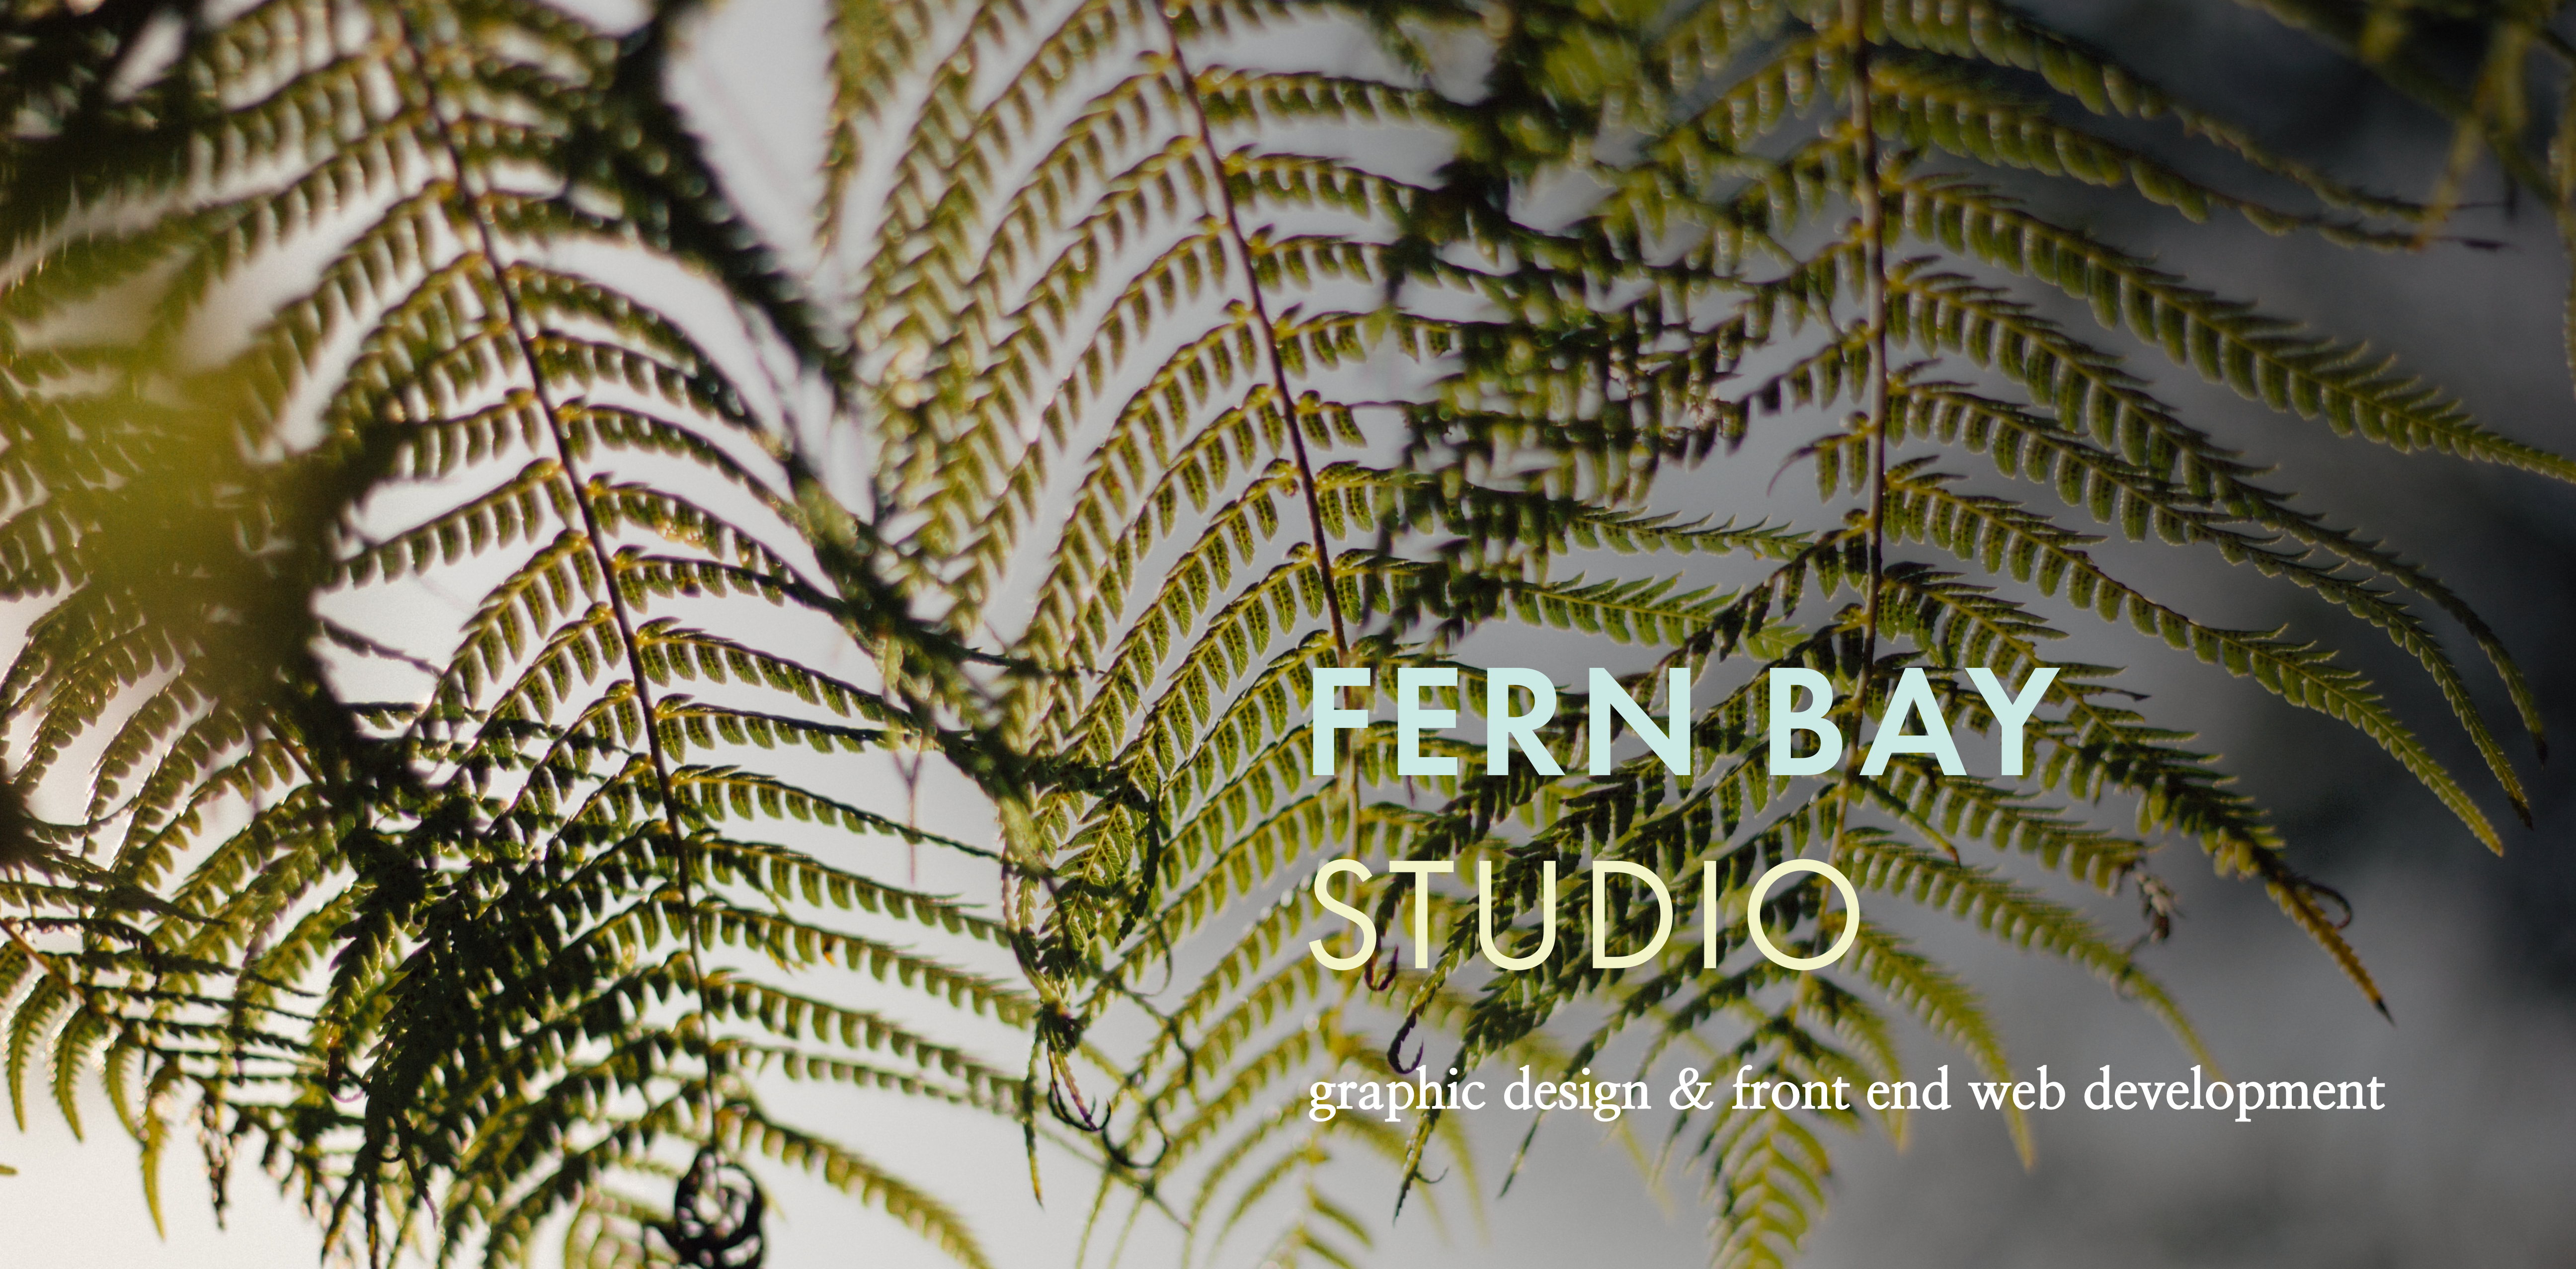 fern bay studio - graphic design & front end web development